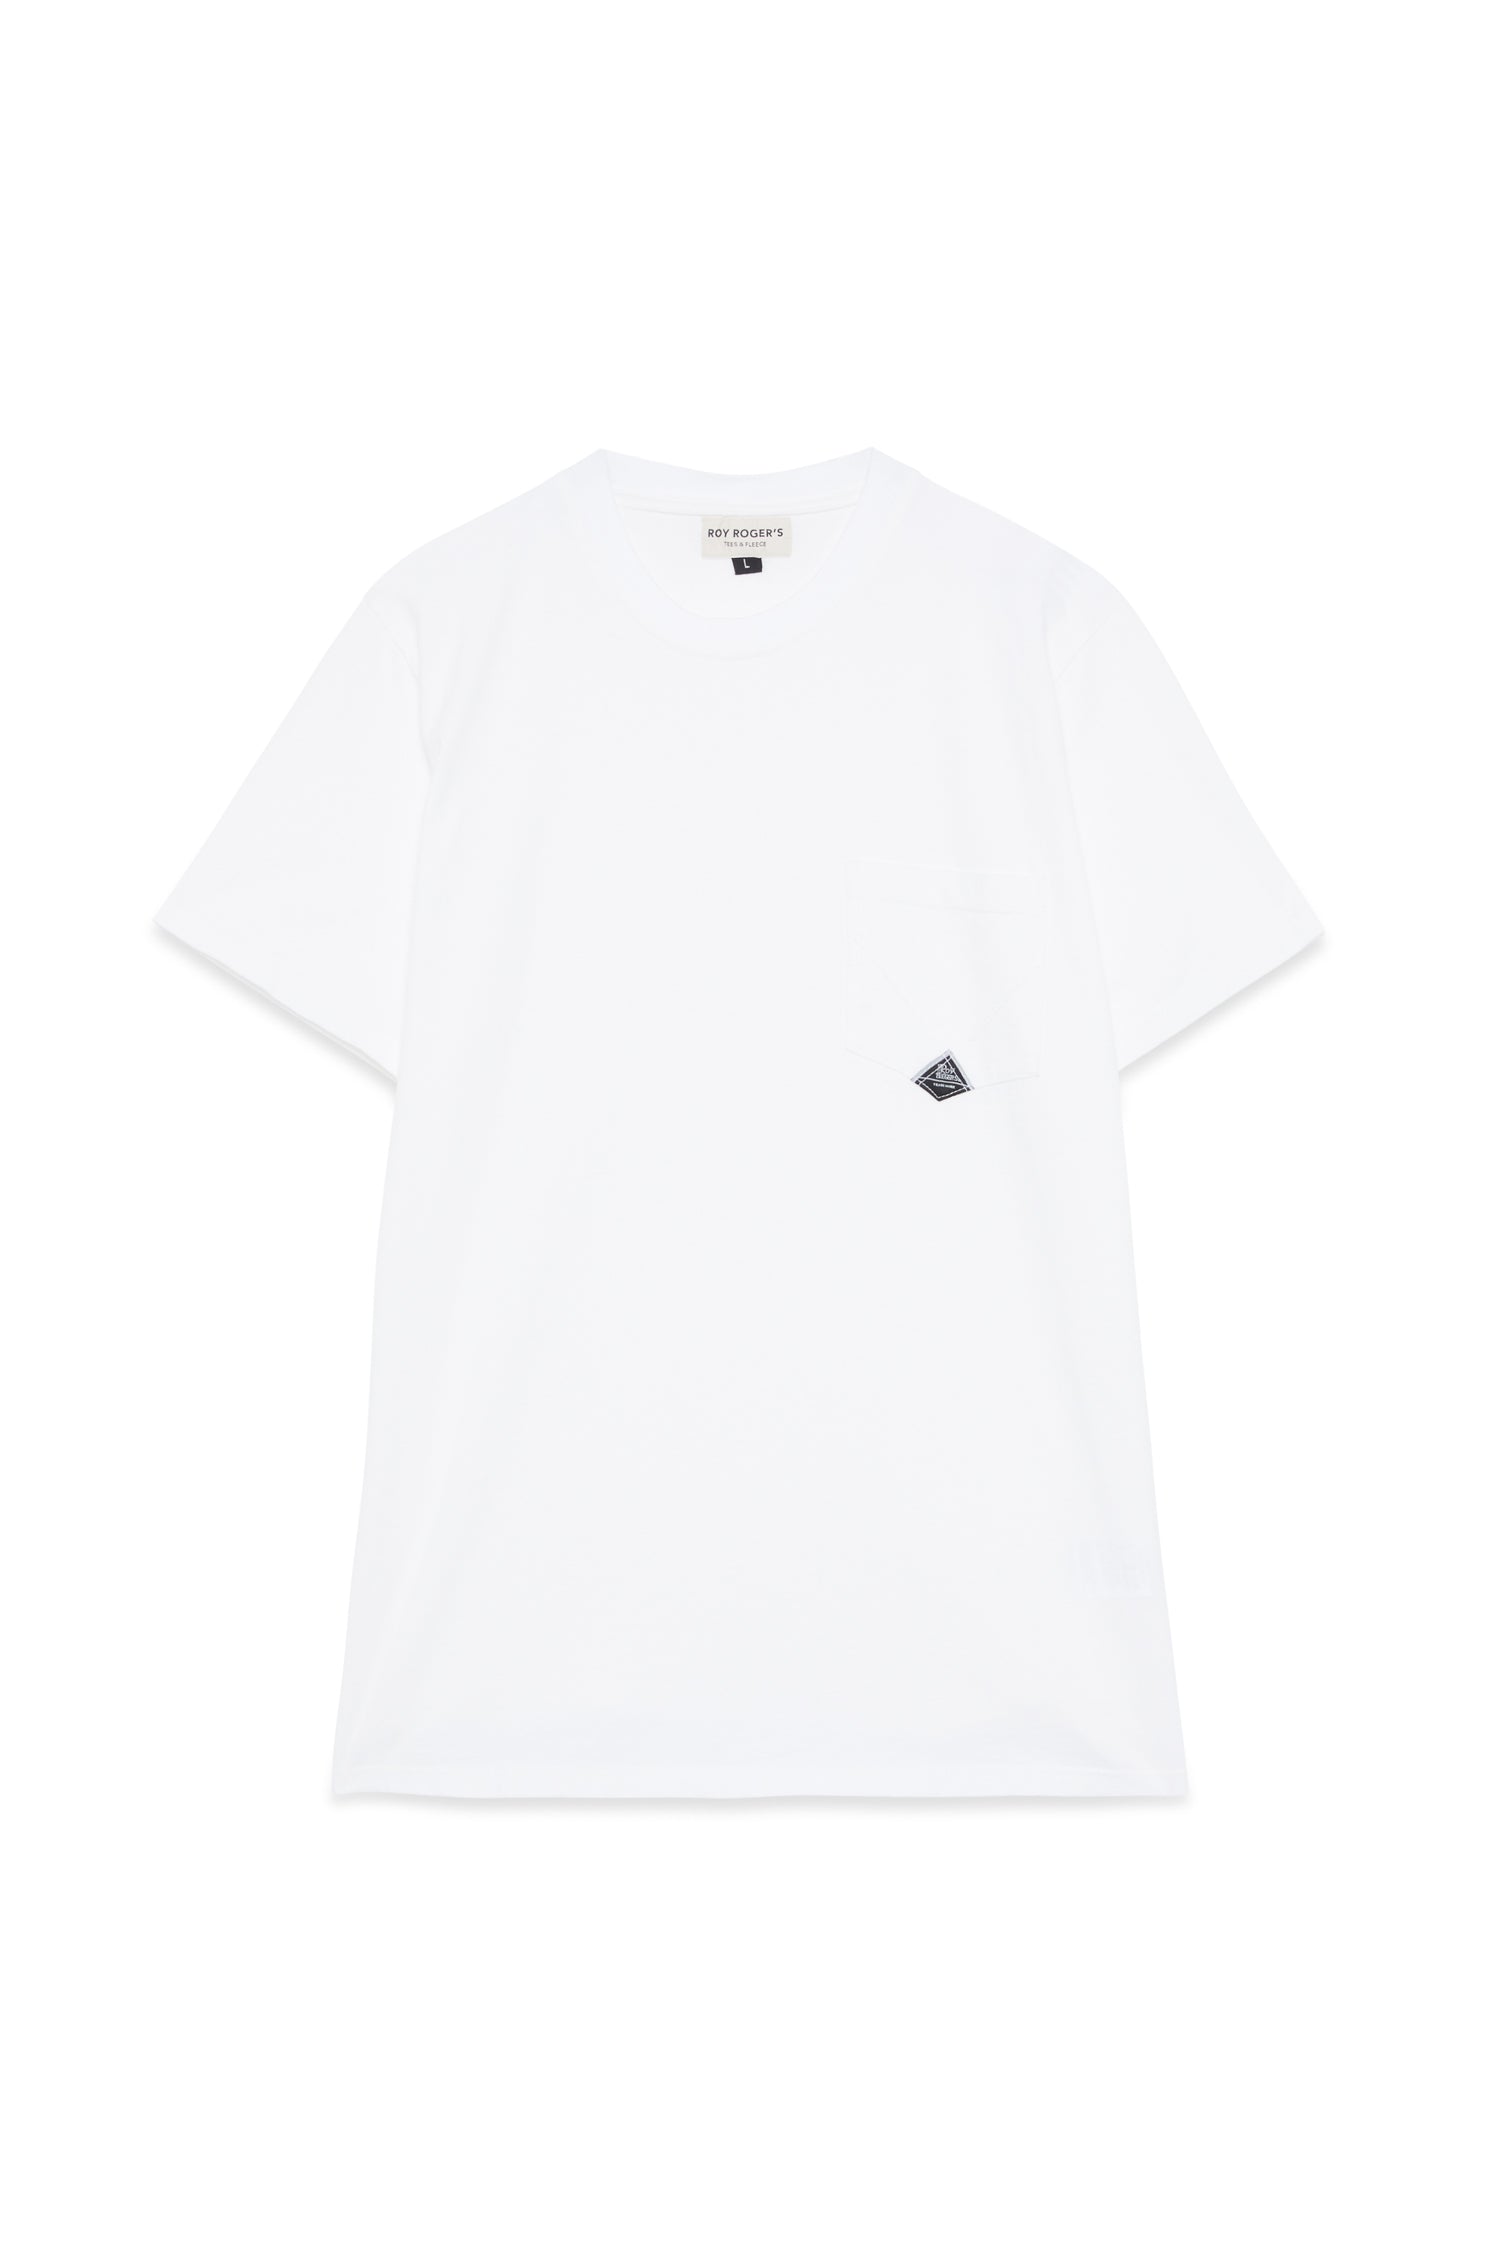 T-shirt ROY ROGER'S Mezza manica taschino
Bianco